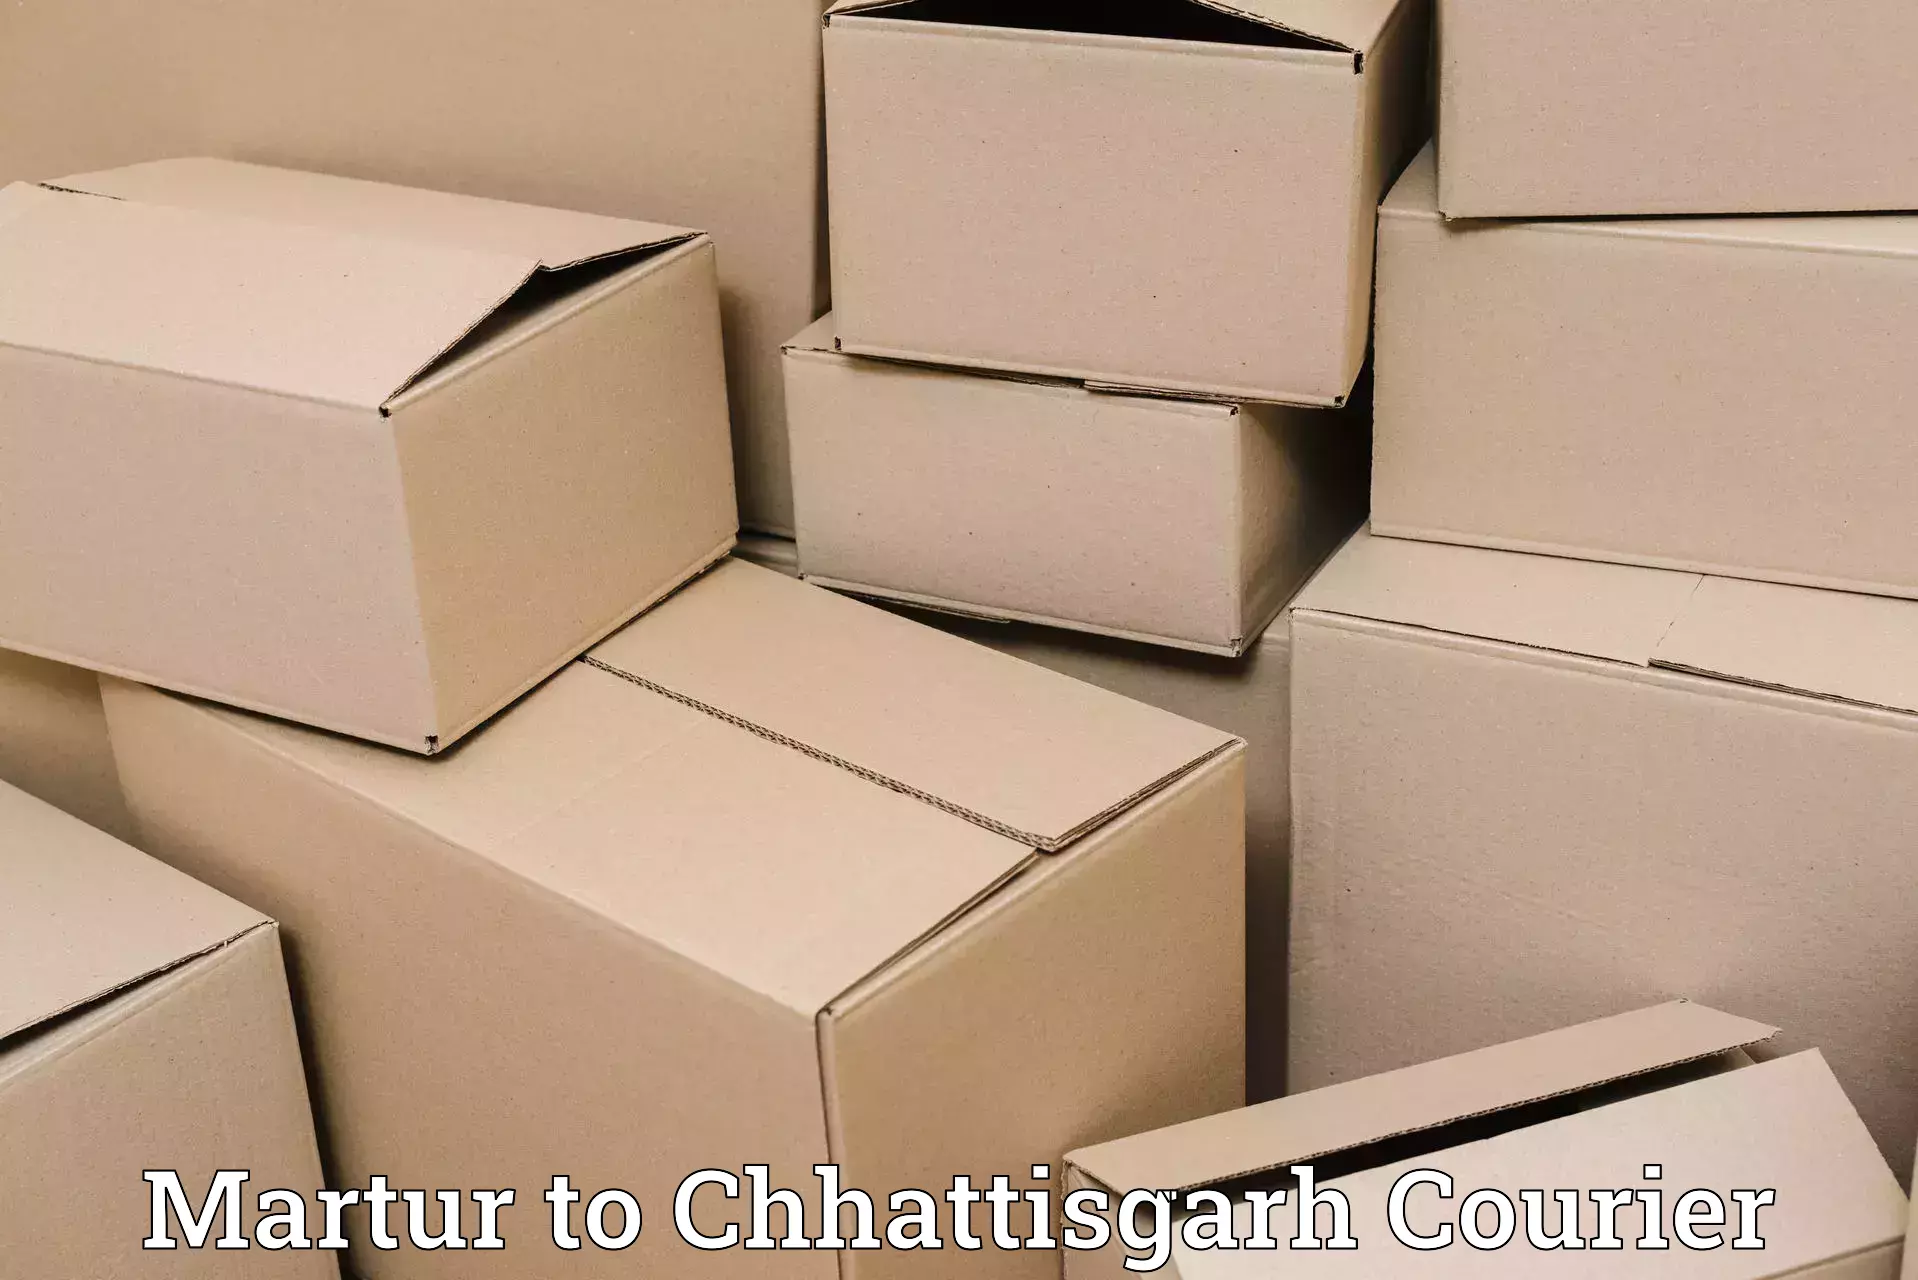 Express mail service Martur to Chhattisgarh